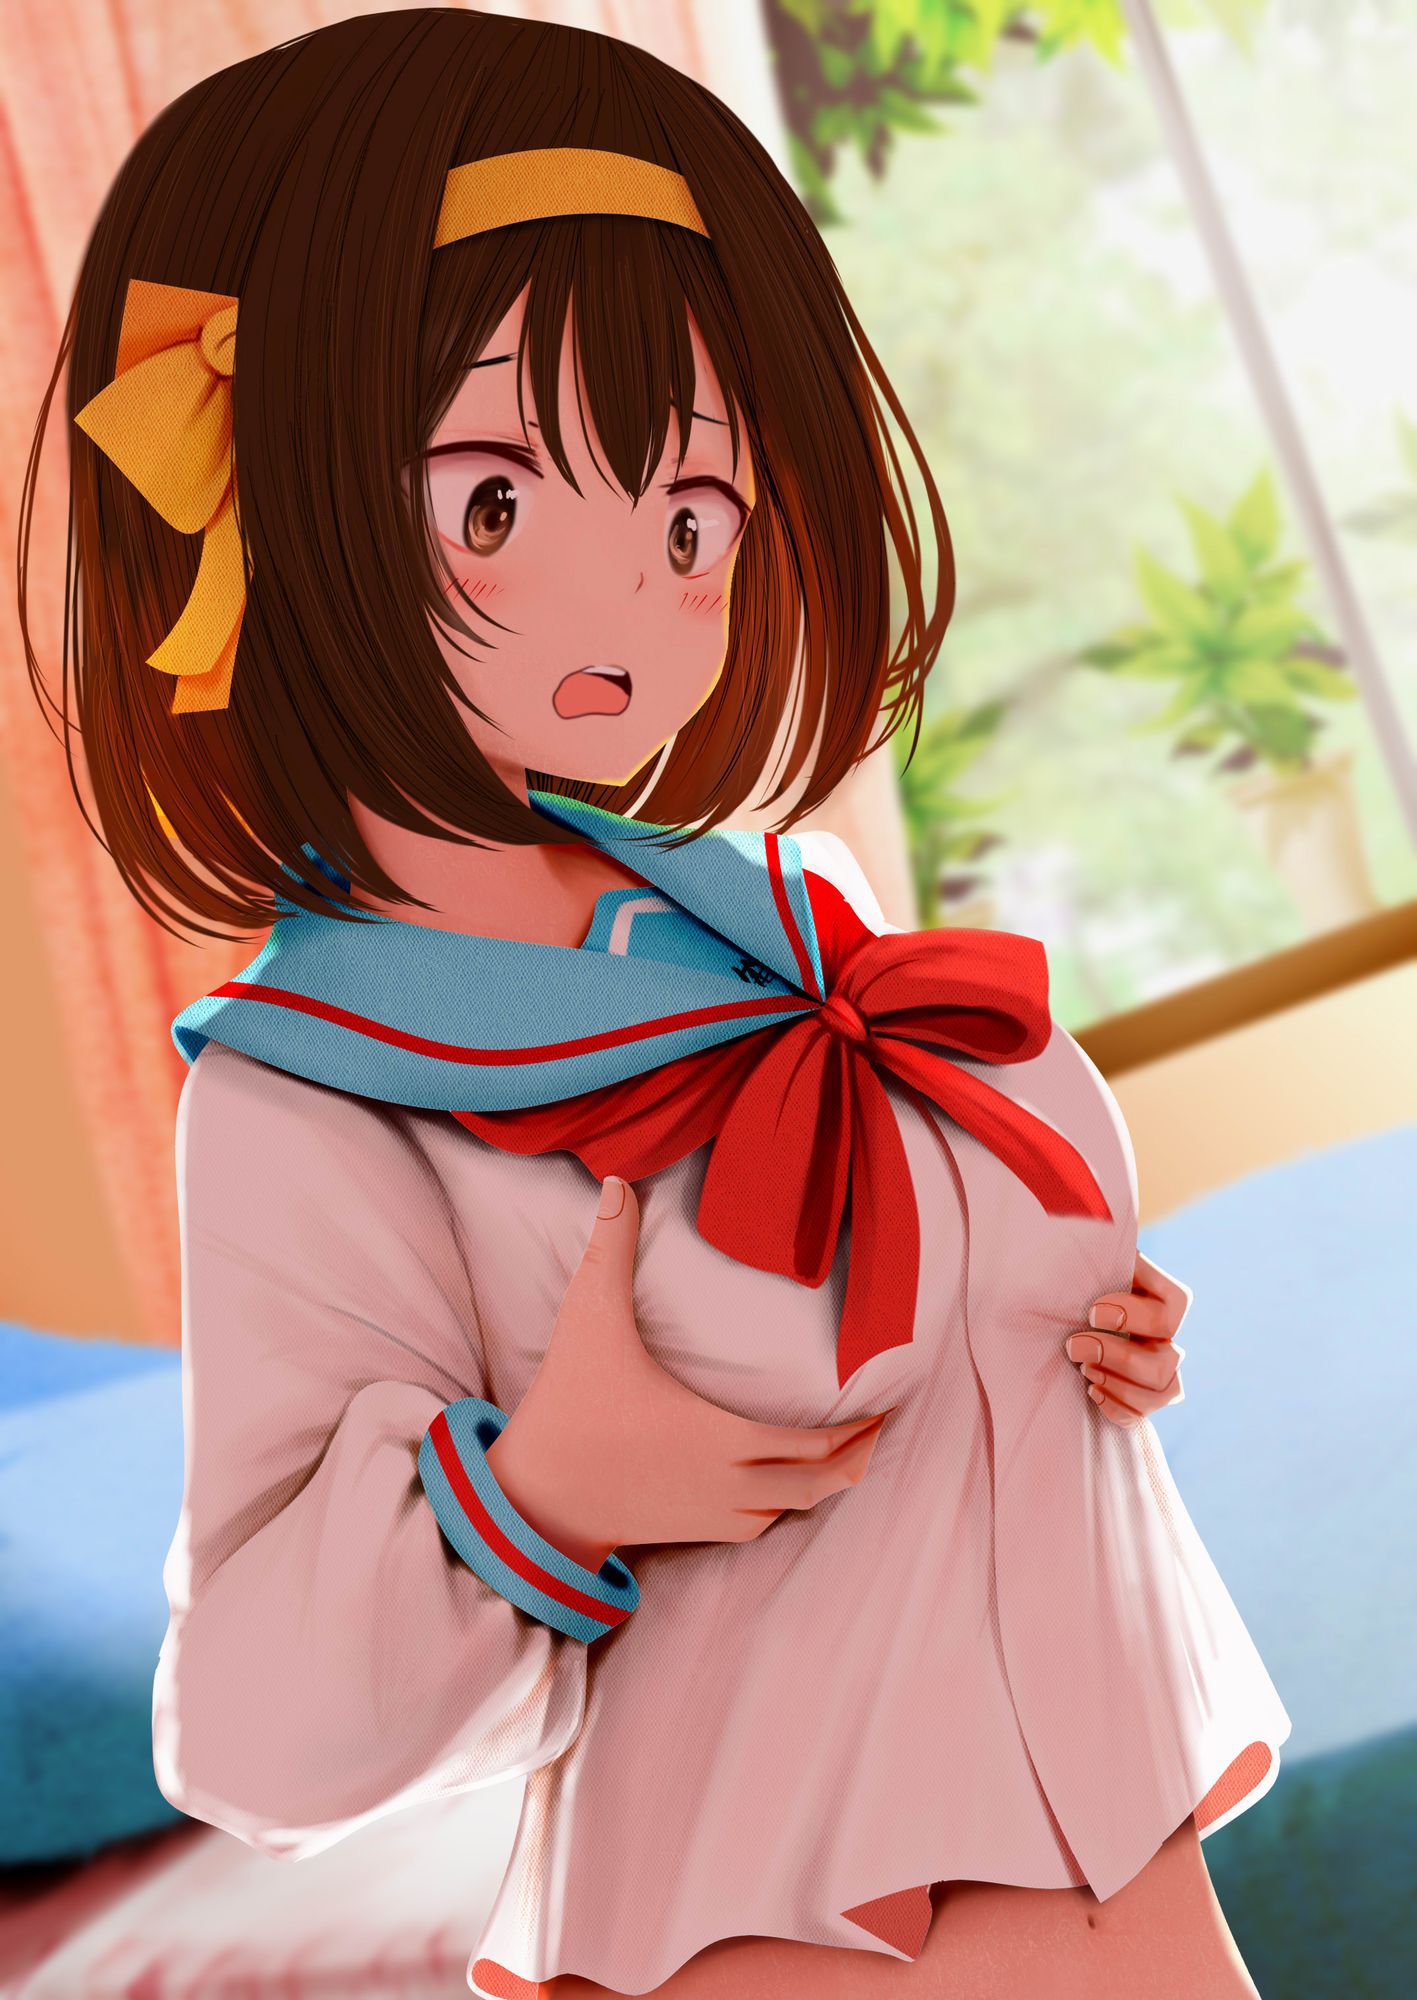 Secondary image of cute girl in uniform [ZIP] 11